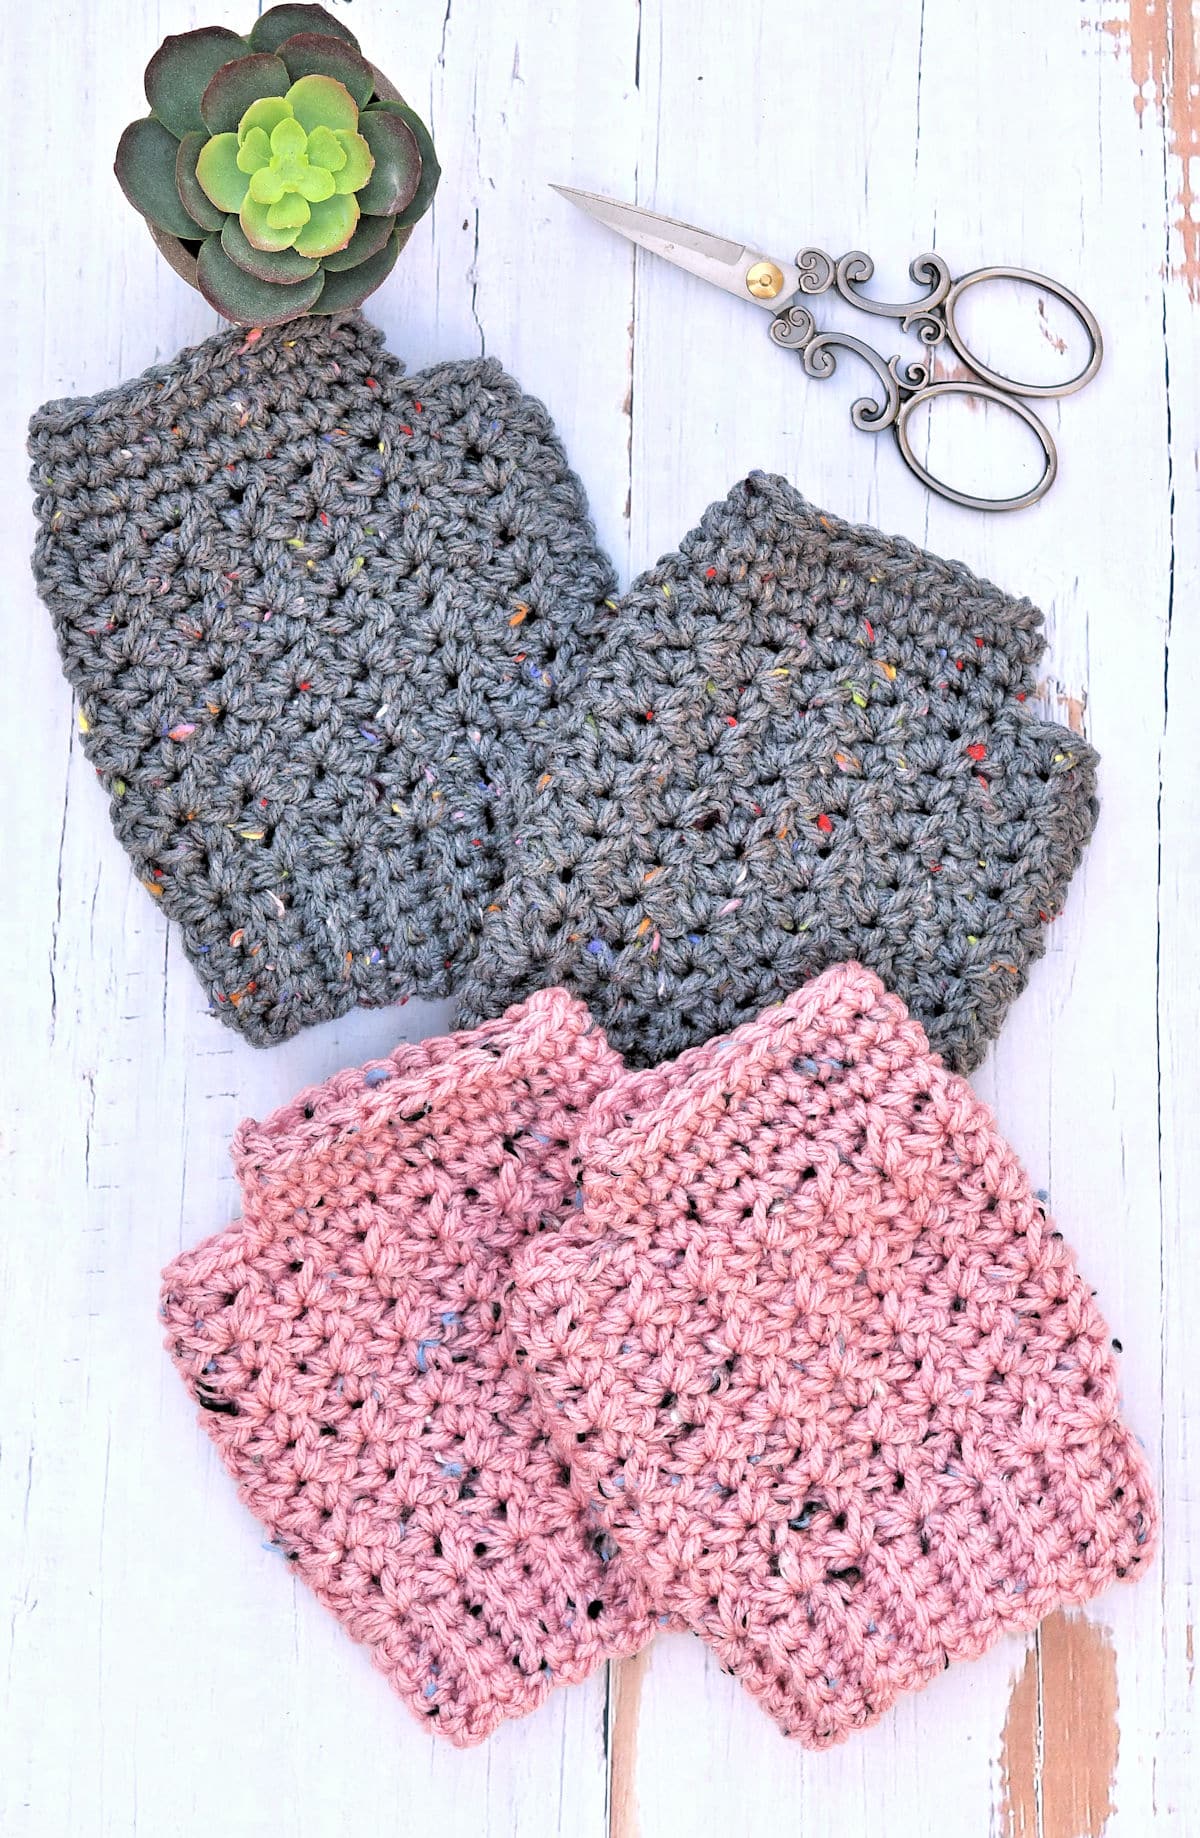 Quick Crochet Fingerless Gloves Pattern in worsted weight by Kim Guzman